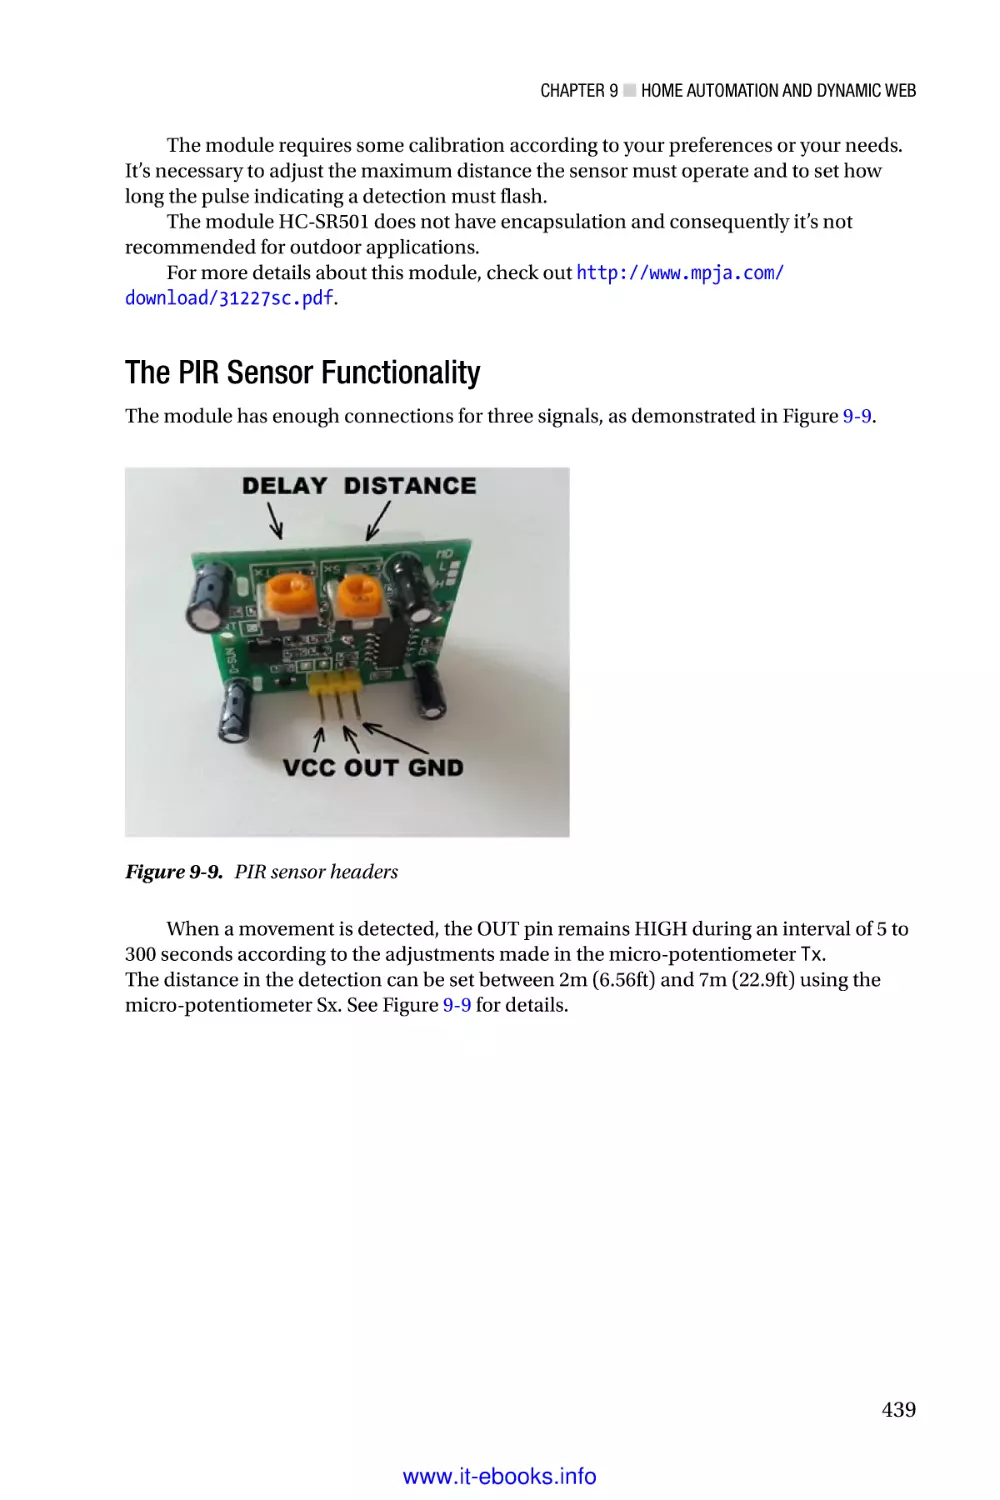 The PIR Sensor Functionality